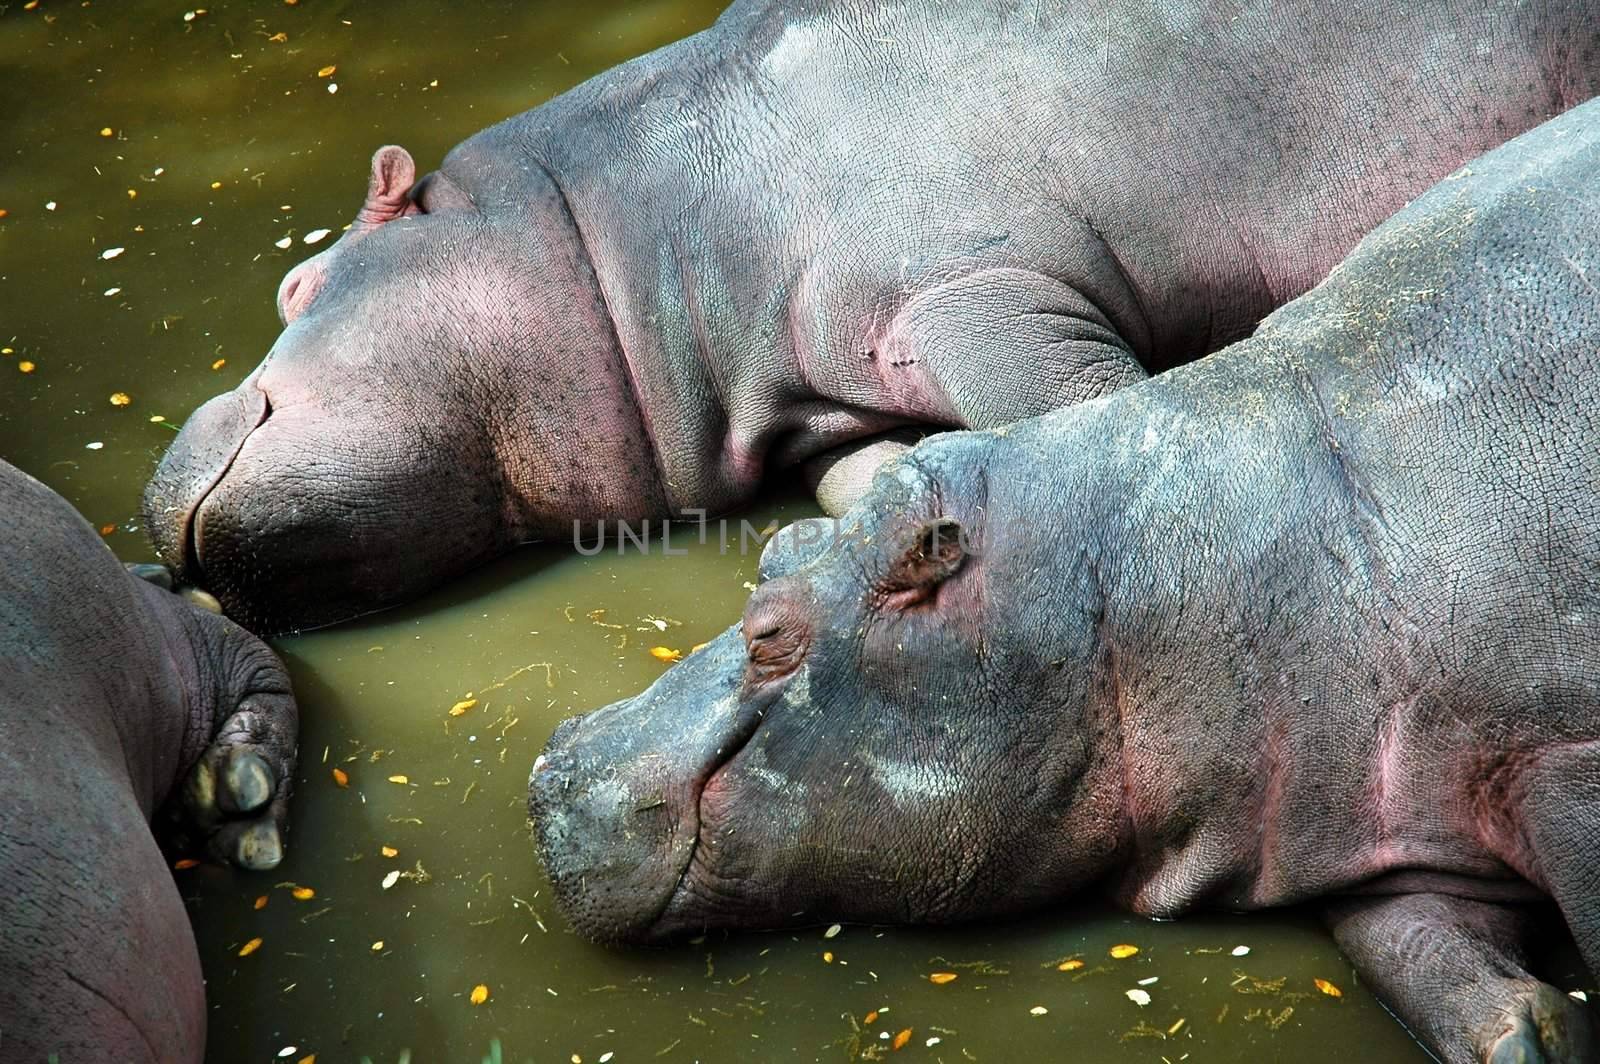 river hippo in madrid zoo resting in the waer